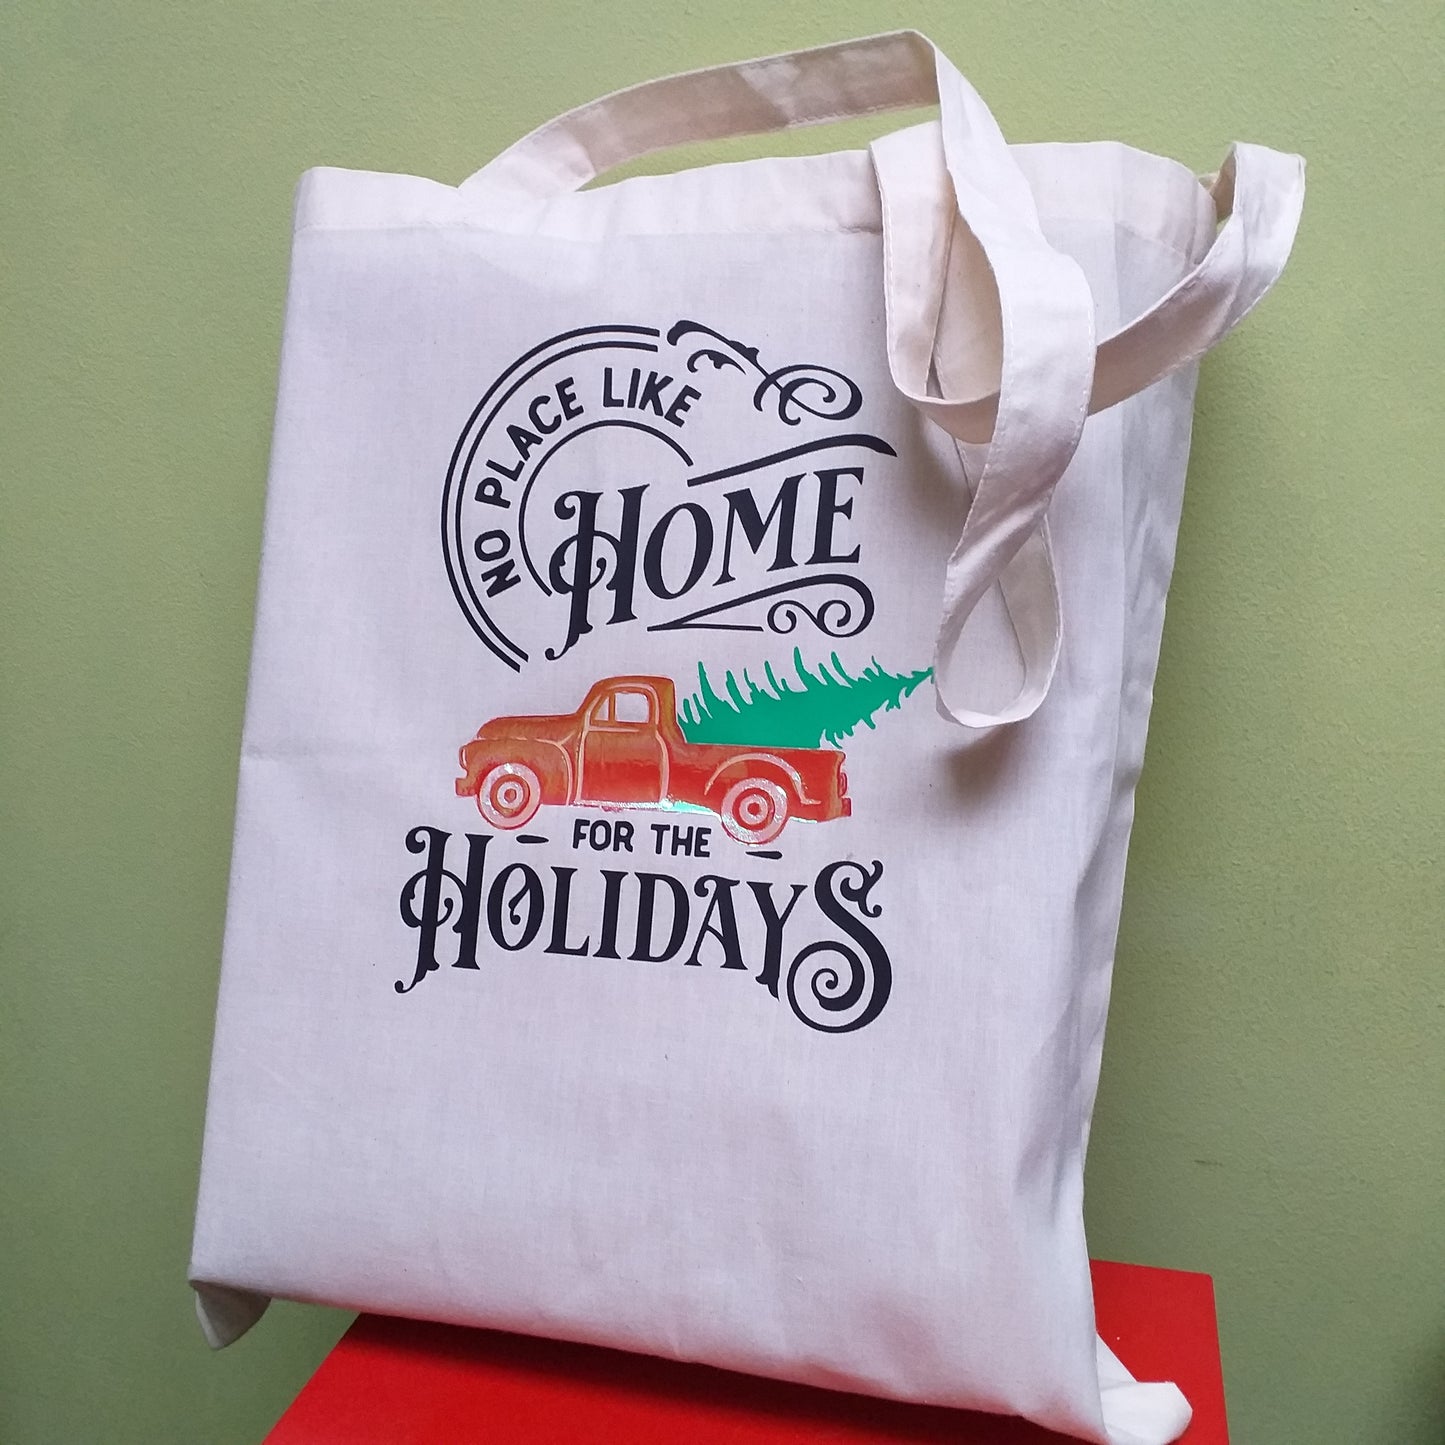 Holiday Shopping bag/ Tote gift /stocking stuffer